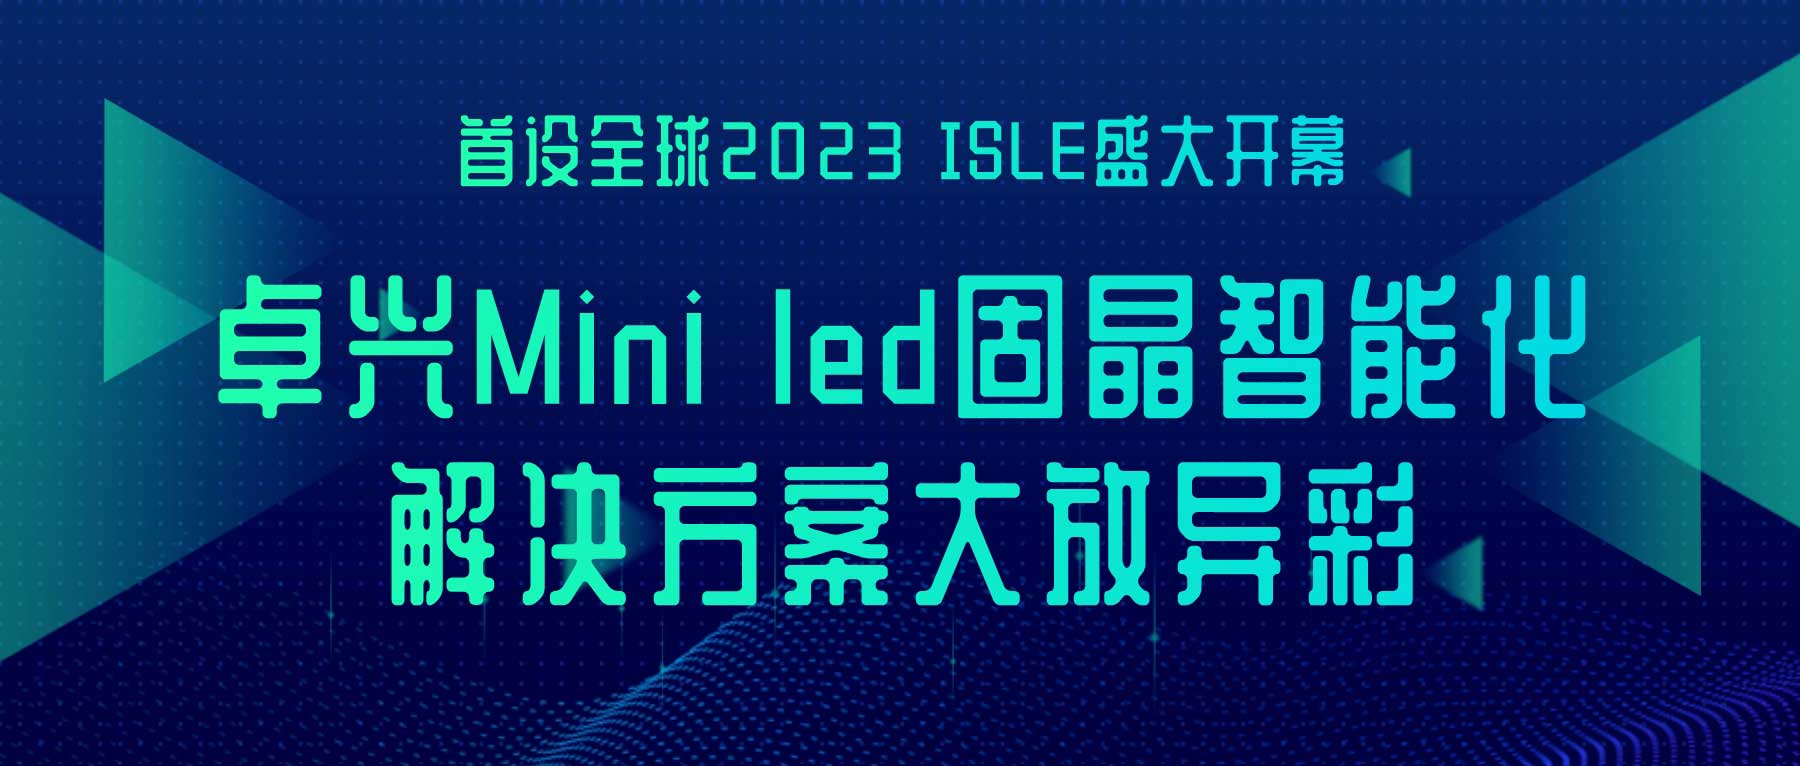 2023 ISLE盛大开幕，我司Mini led固晶智能化解决方案大放异彩